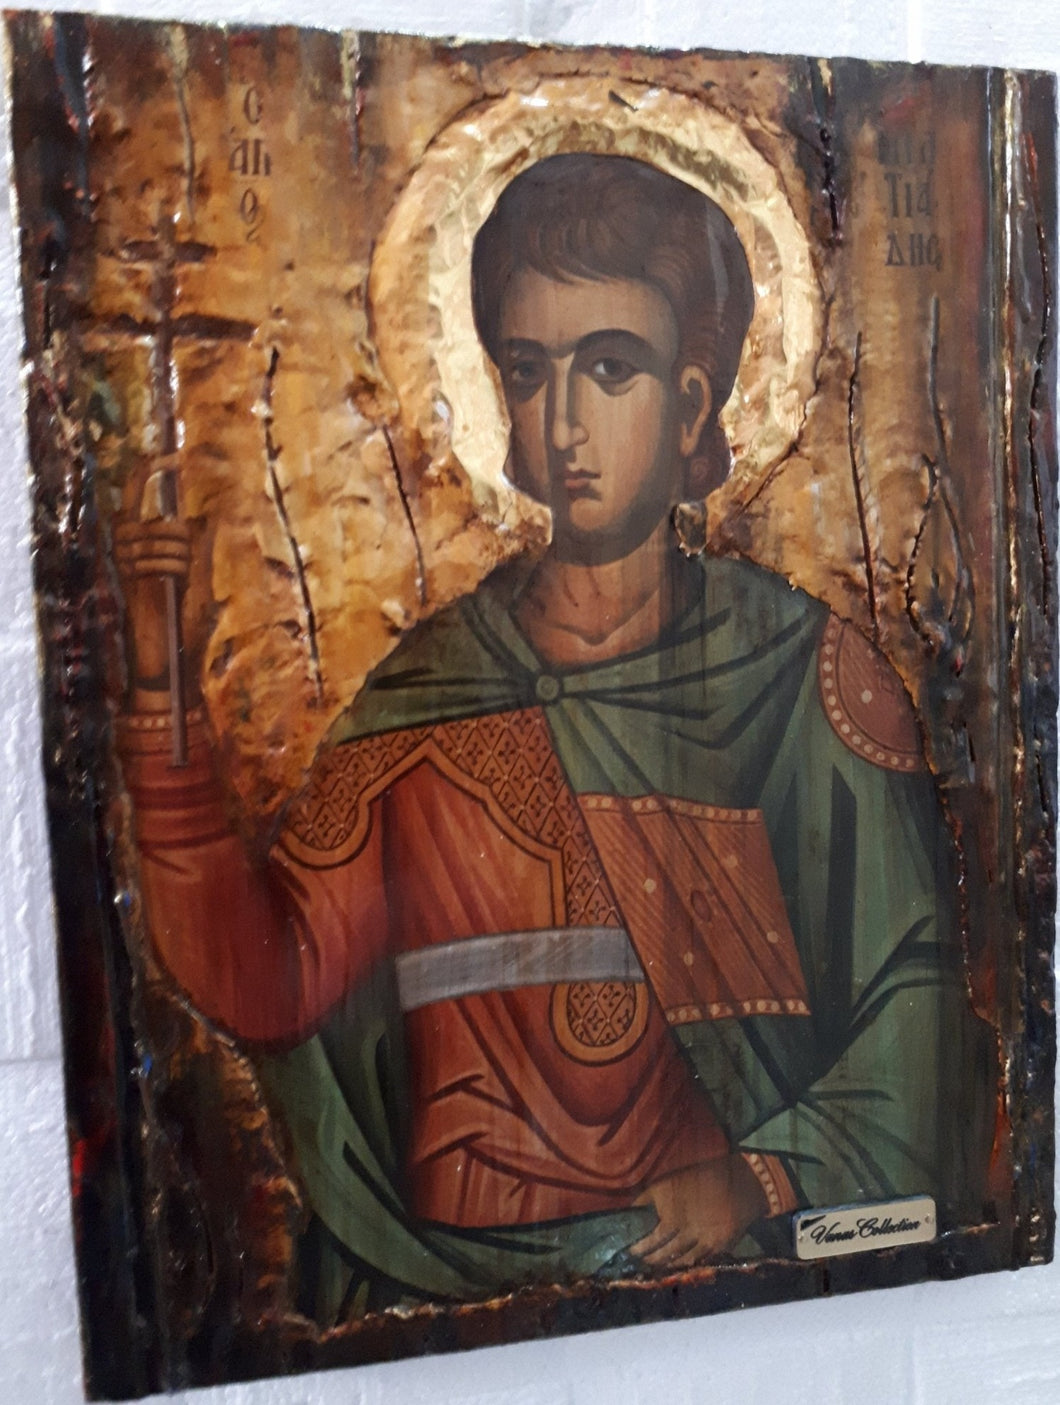 Saint St Miltiadis Icon-Greek Orthodox Byzantine Religious Handmade Gift Icons - Vanas Collection